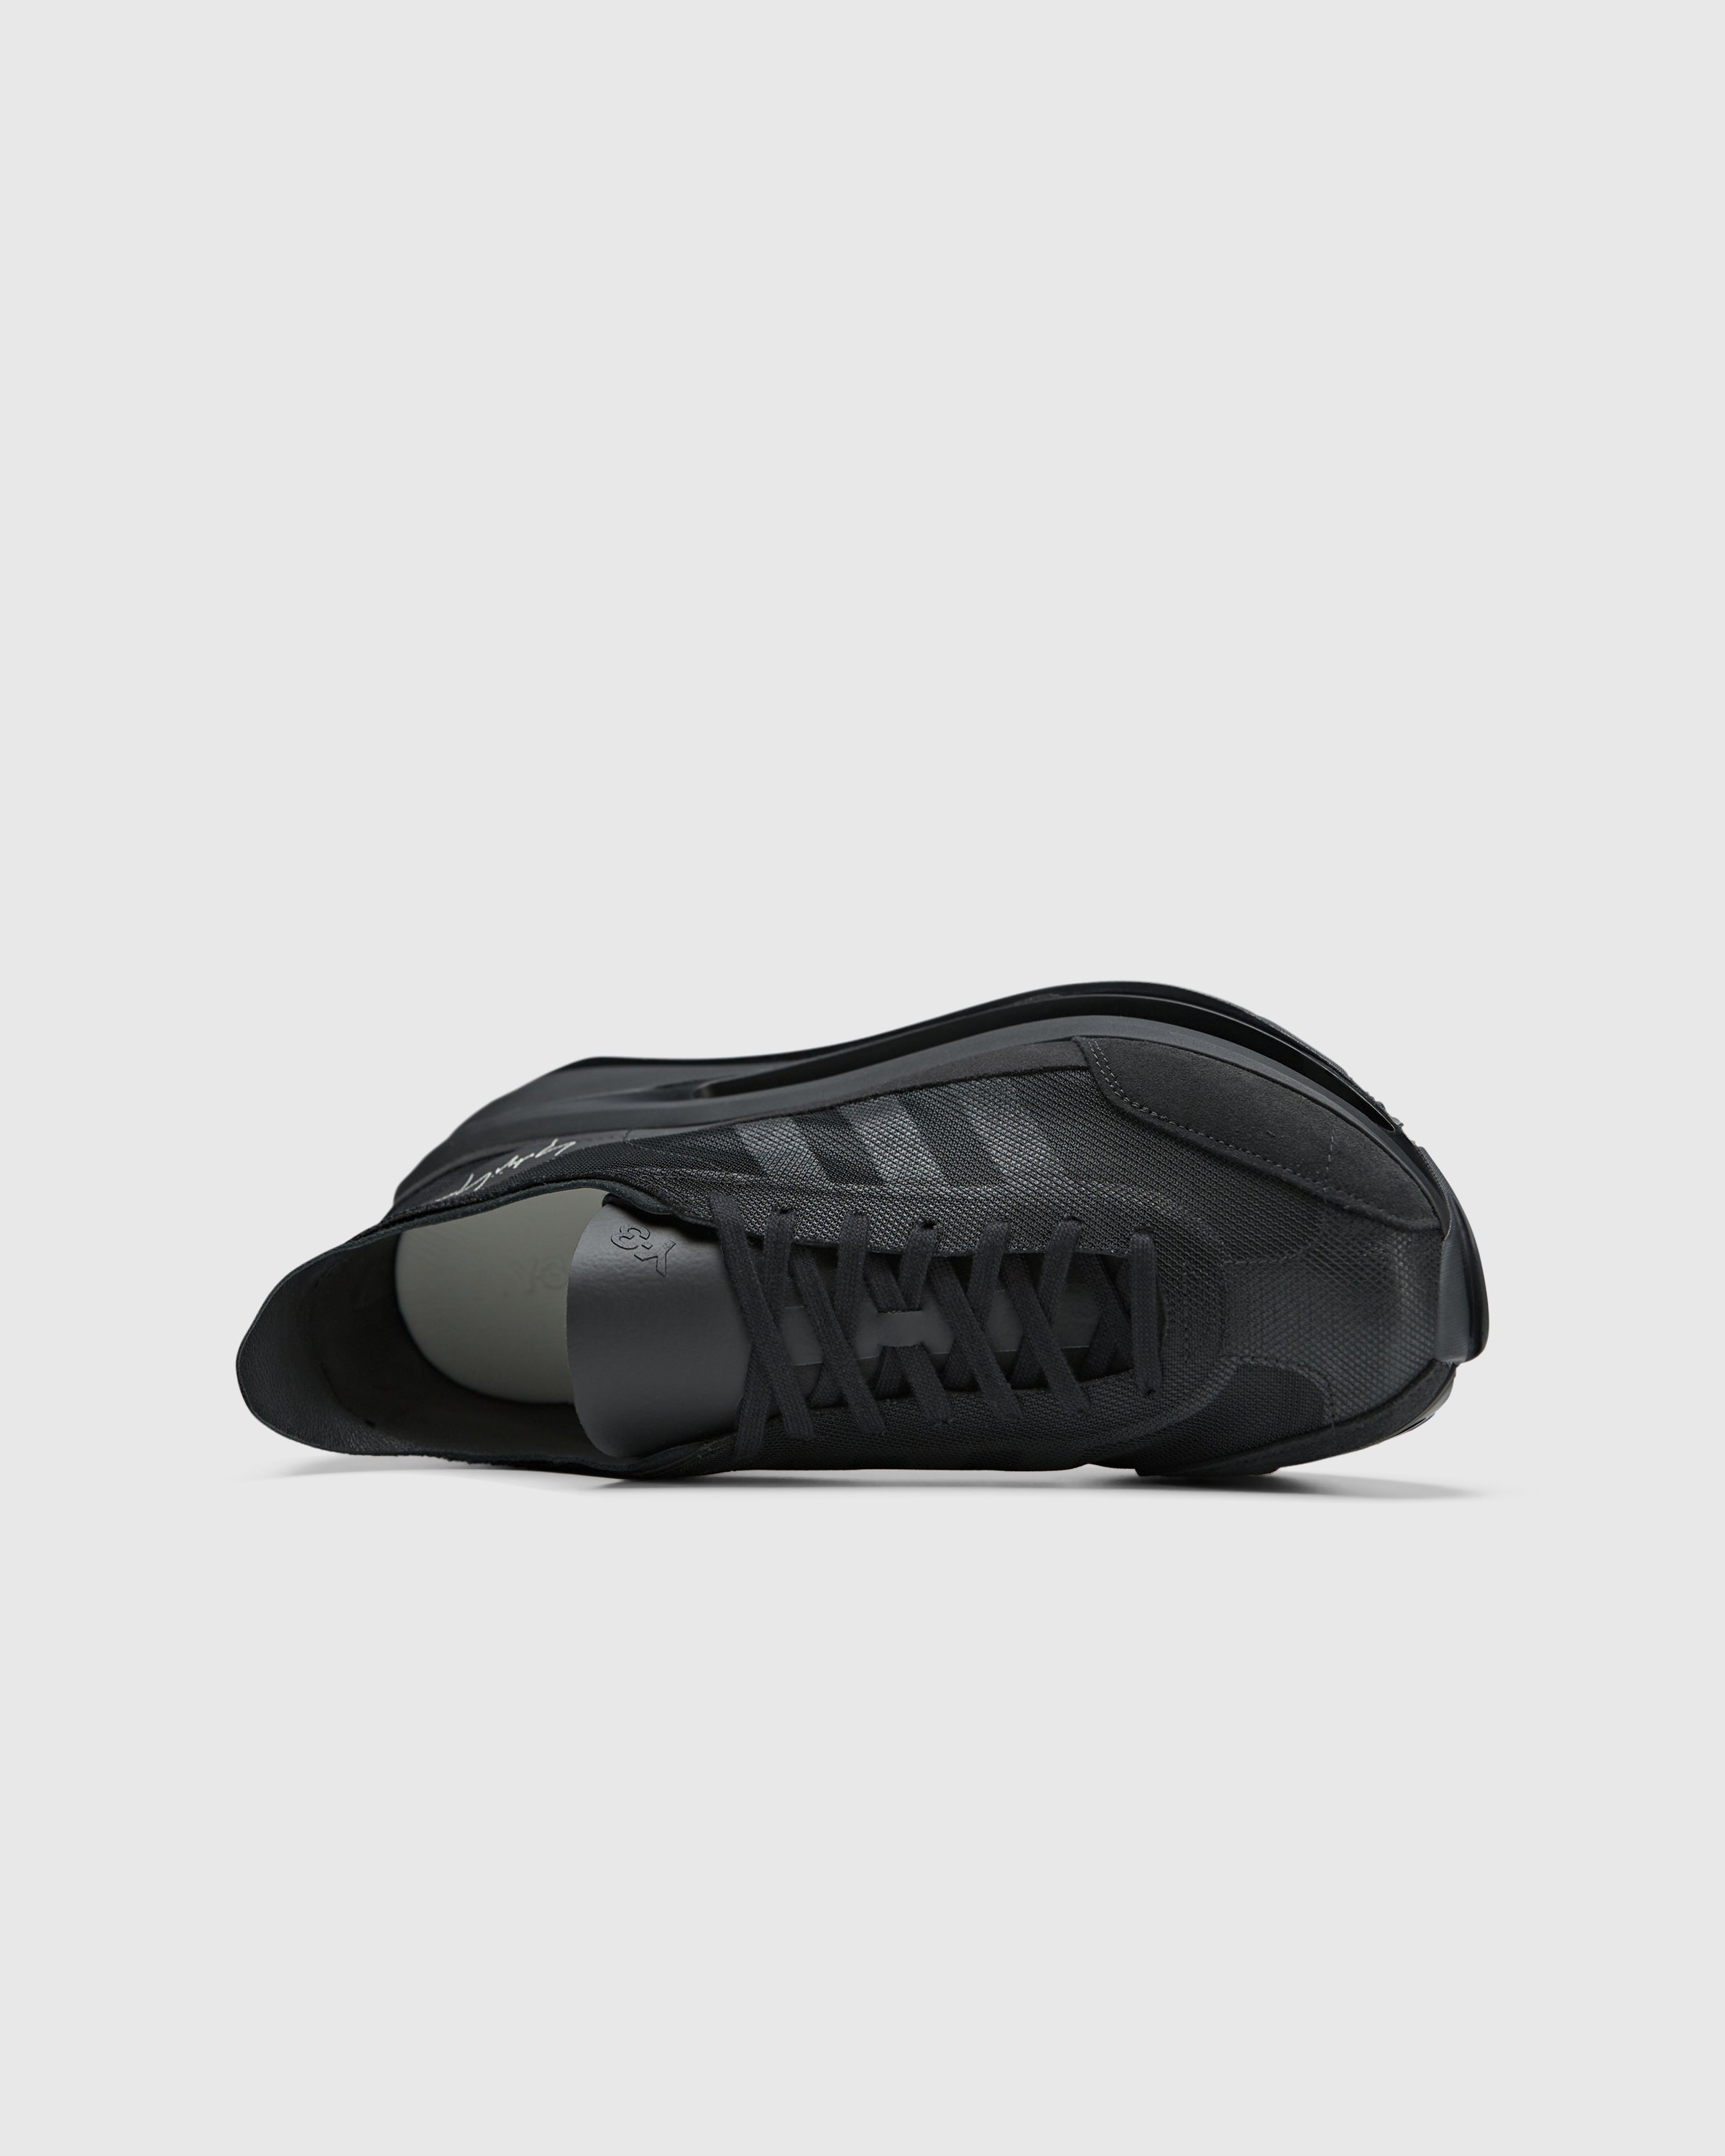 Y-3 - S-Gendo Run Black/Black/Black - Footwear - Black - Image 5